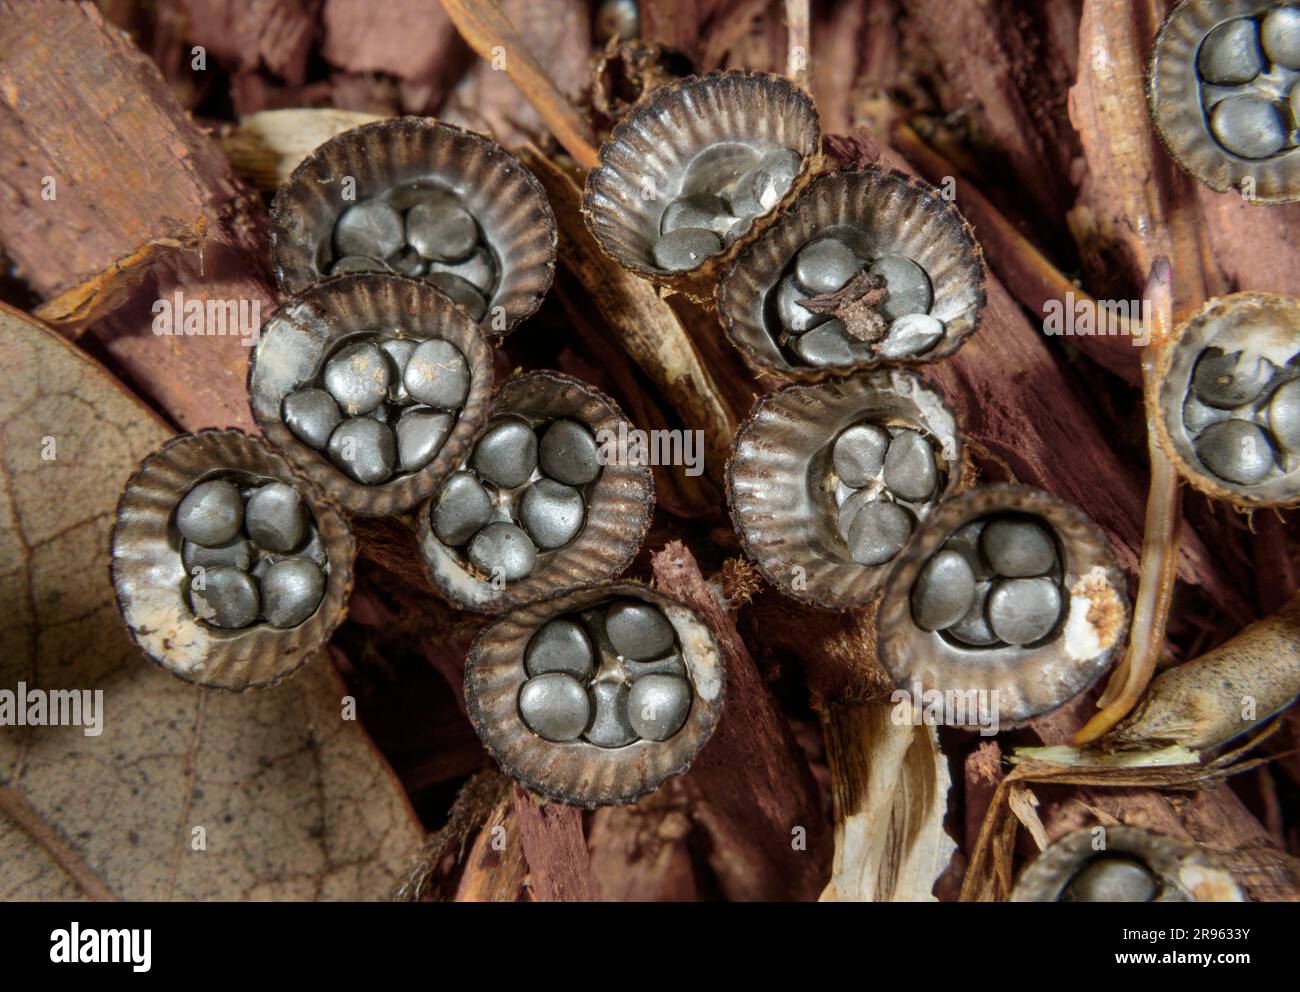 Späne aus dem Vogelnest (Cyathus striatus) auf Holzspänen, Galveston, Texas, USA. Stockfoto